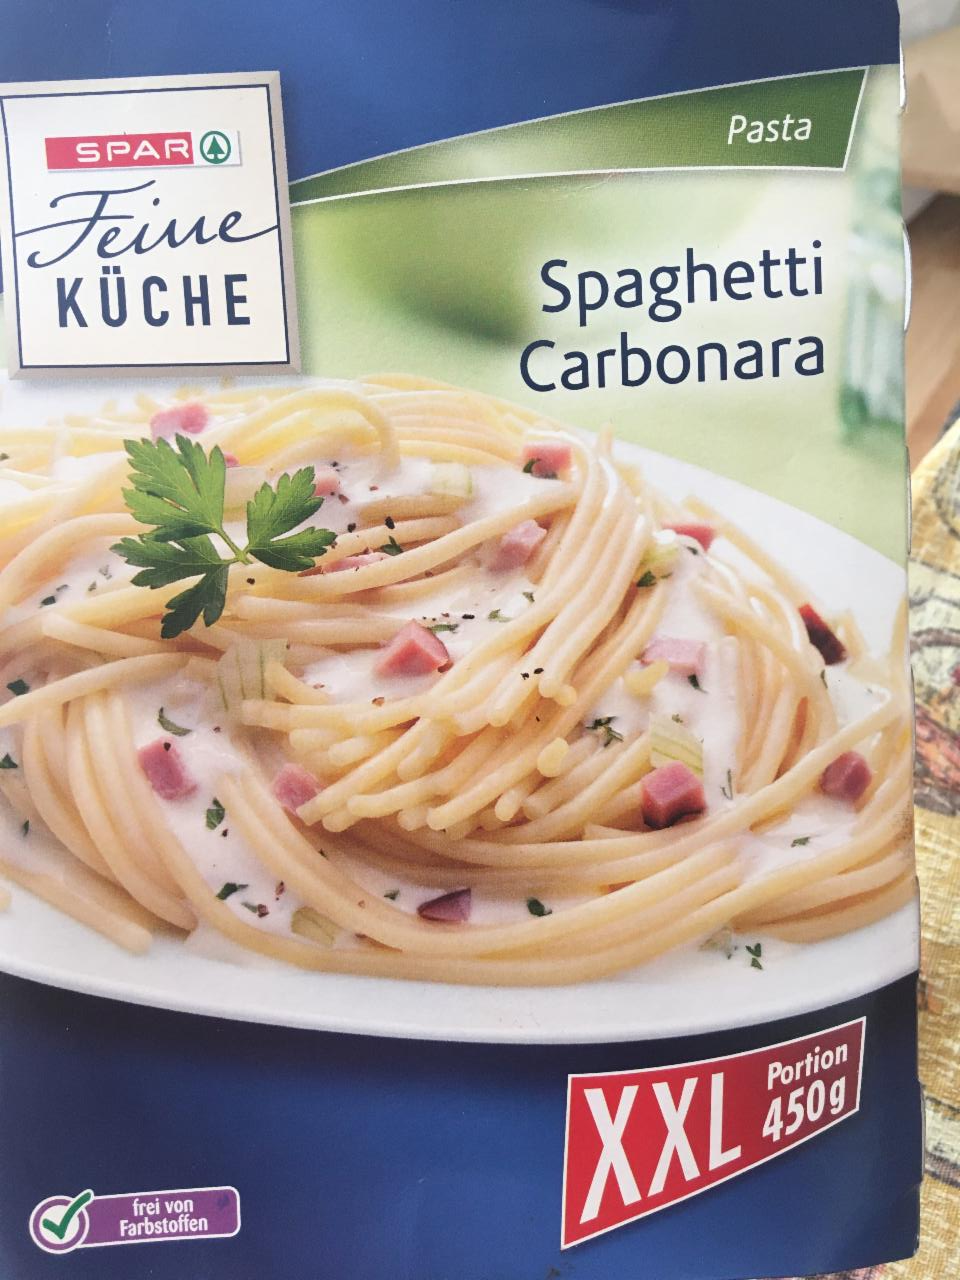 Fotografie - Spaghetti Carbonara Spar feine küche